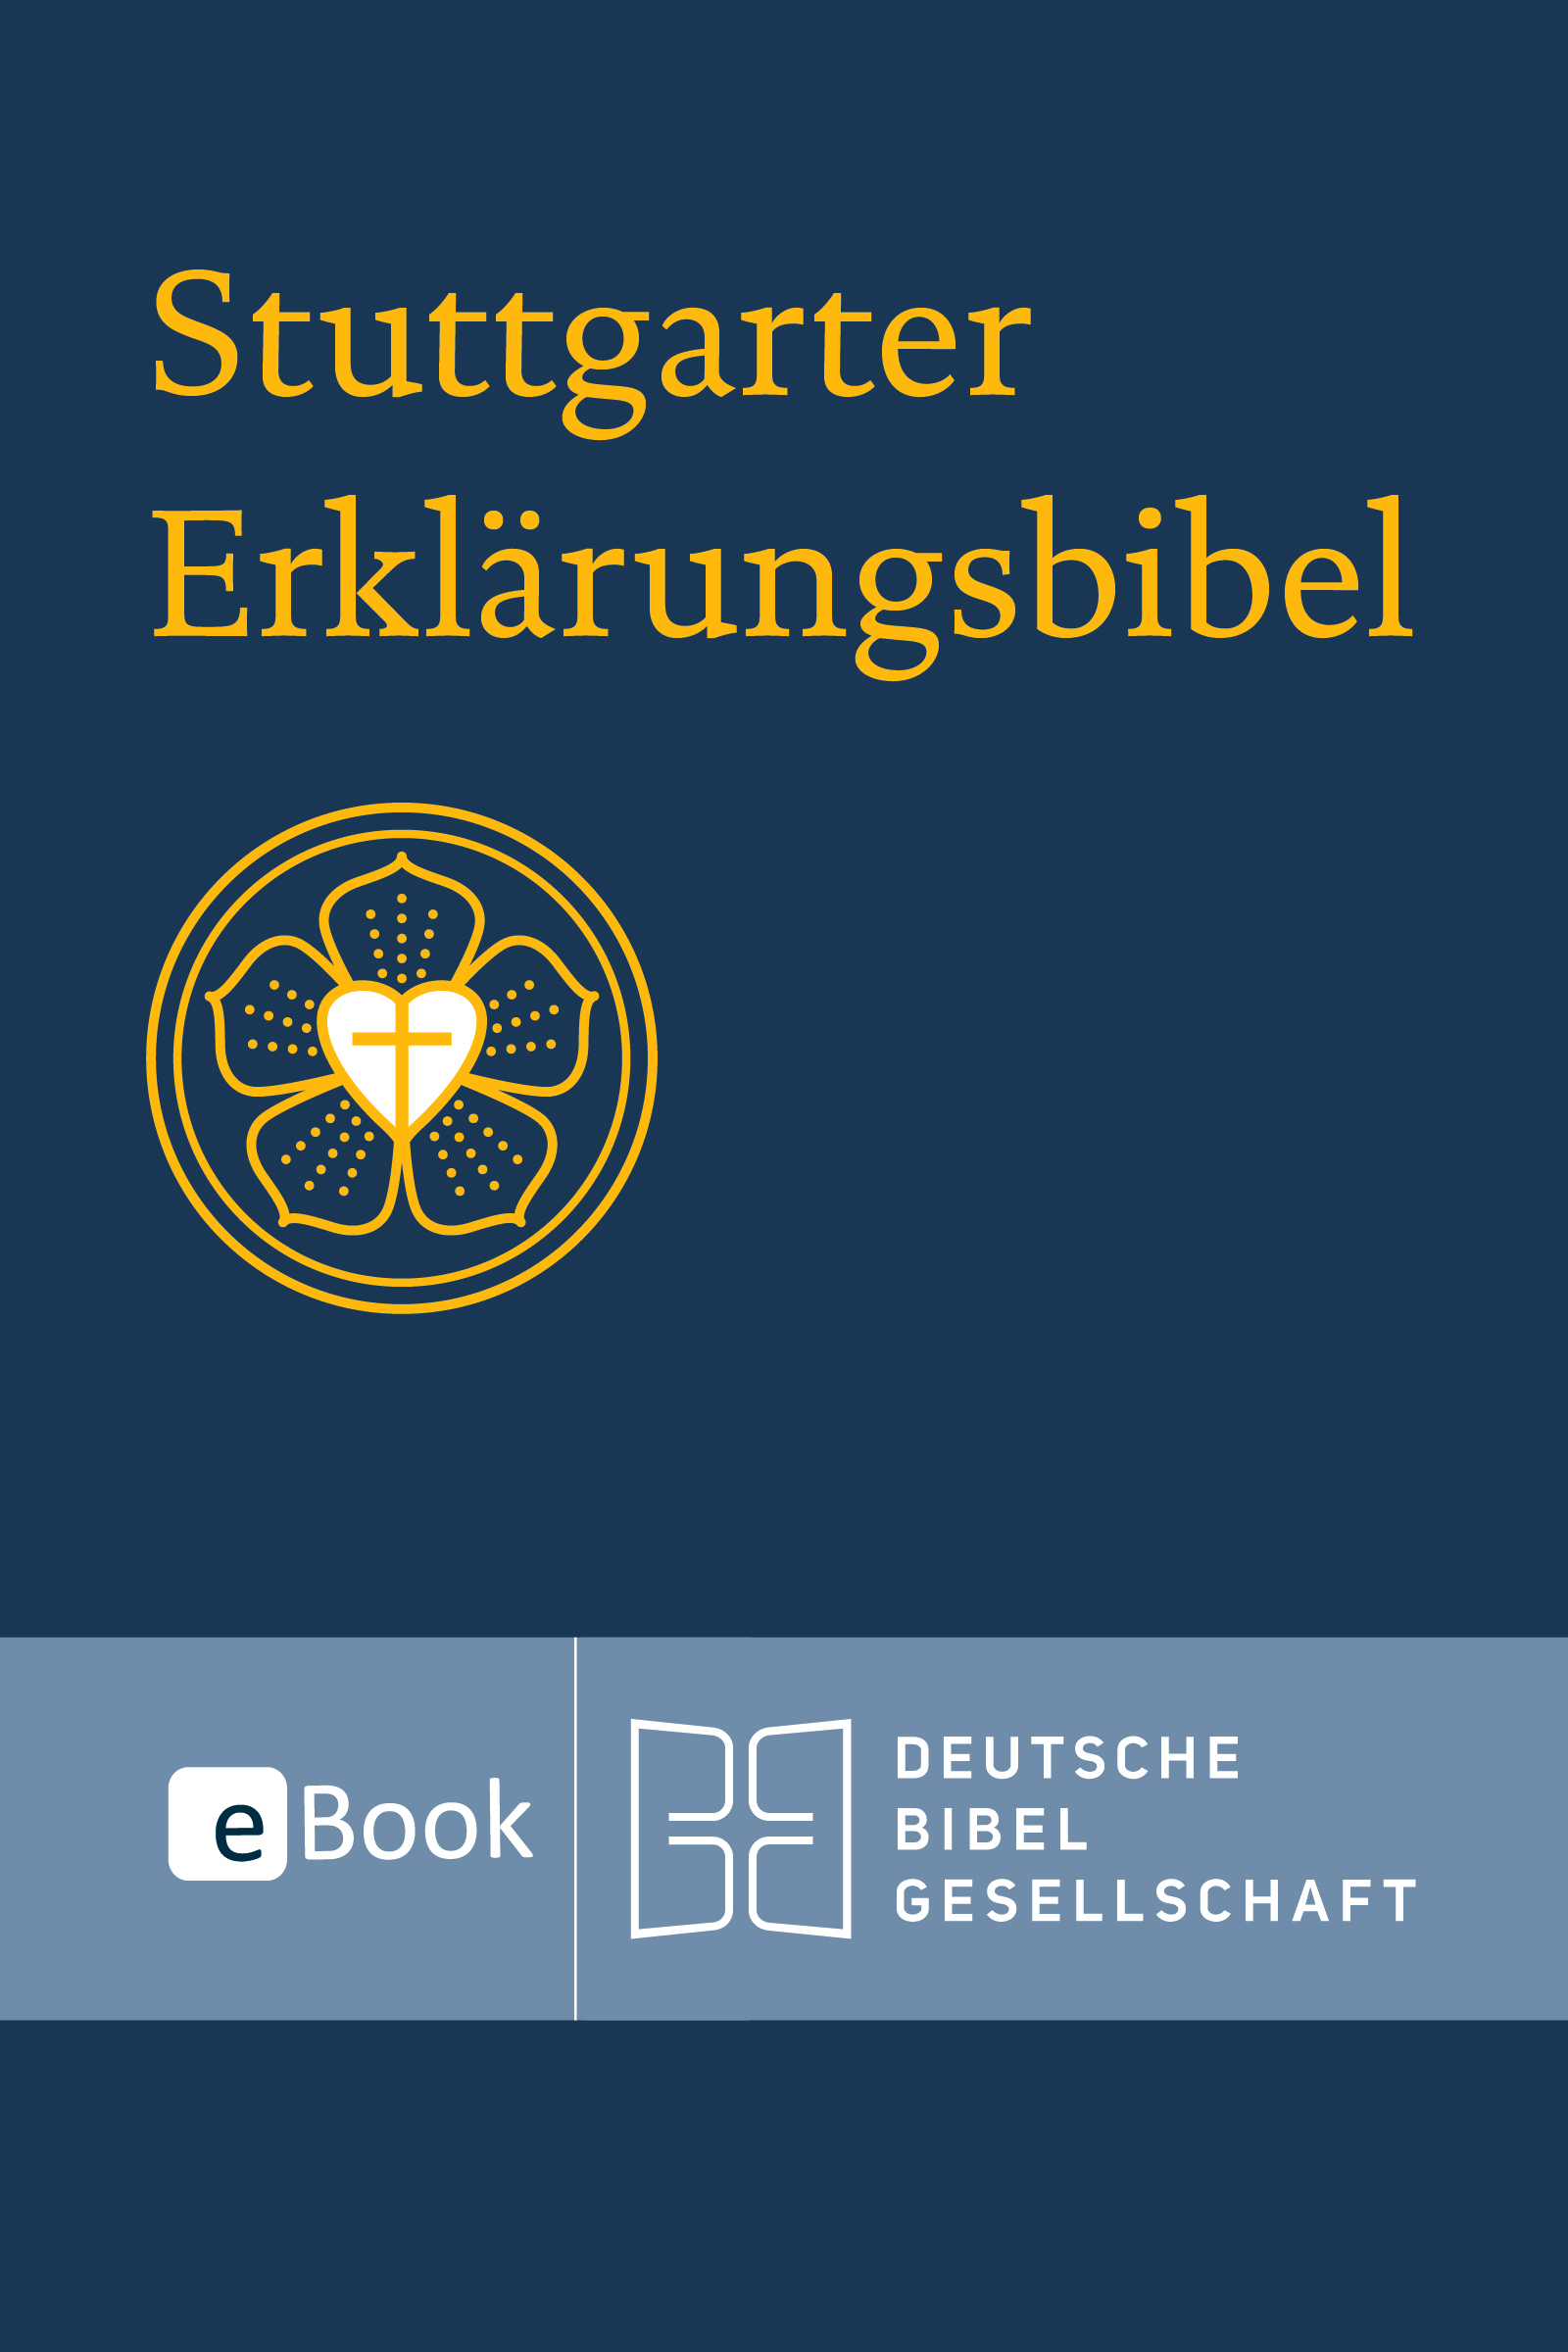 Stuttgarter Erklärungsbibel. eBook im ePUB-Format